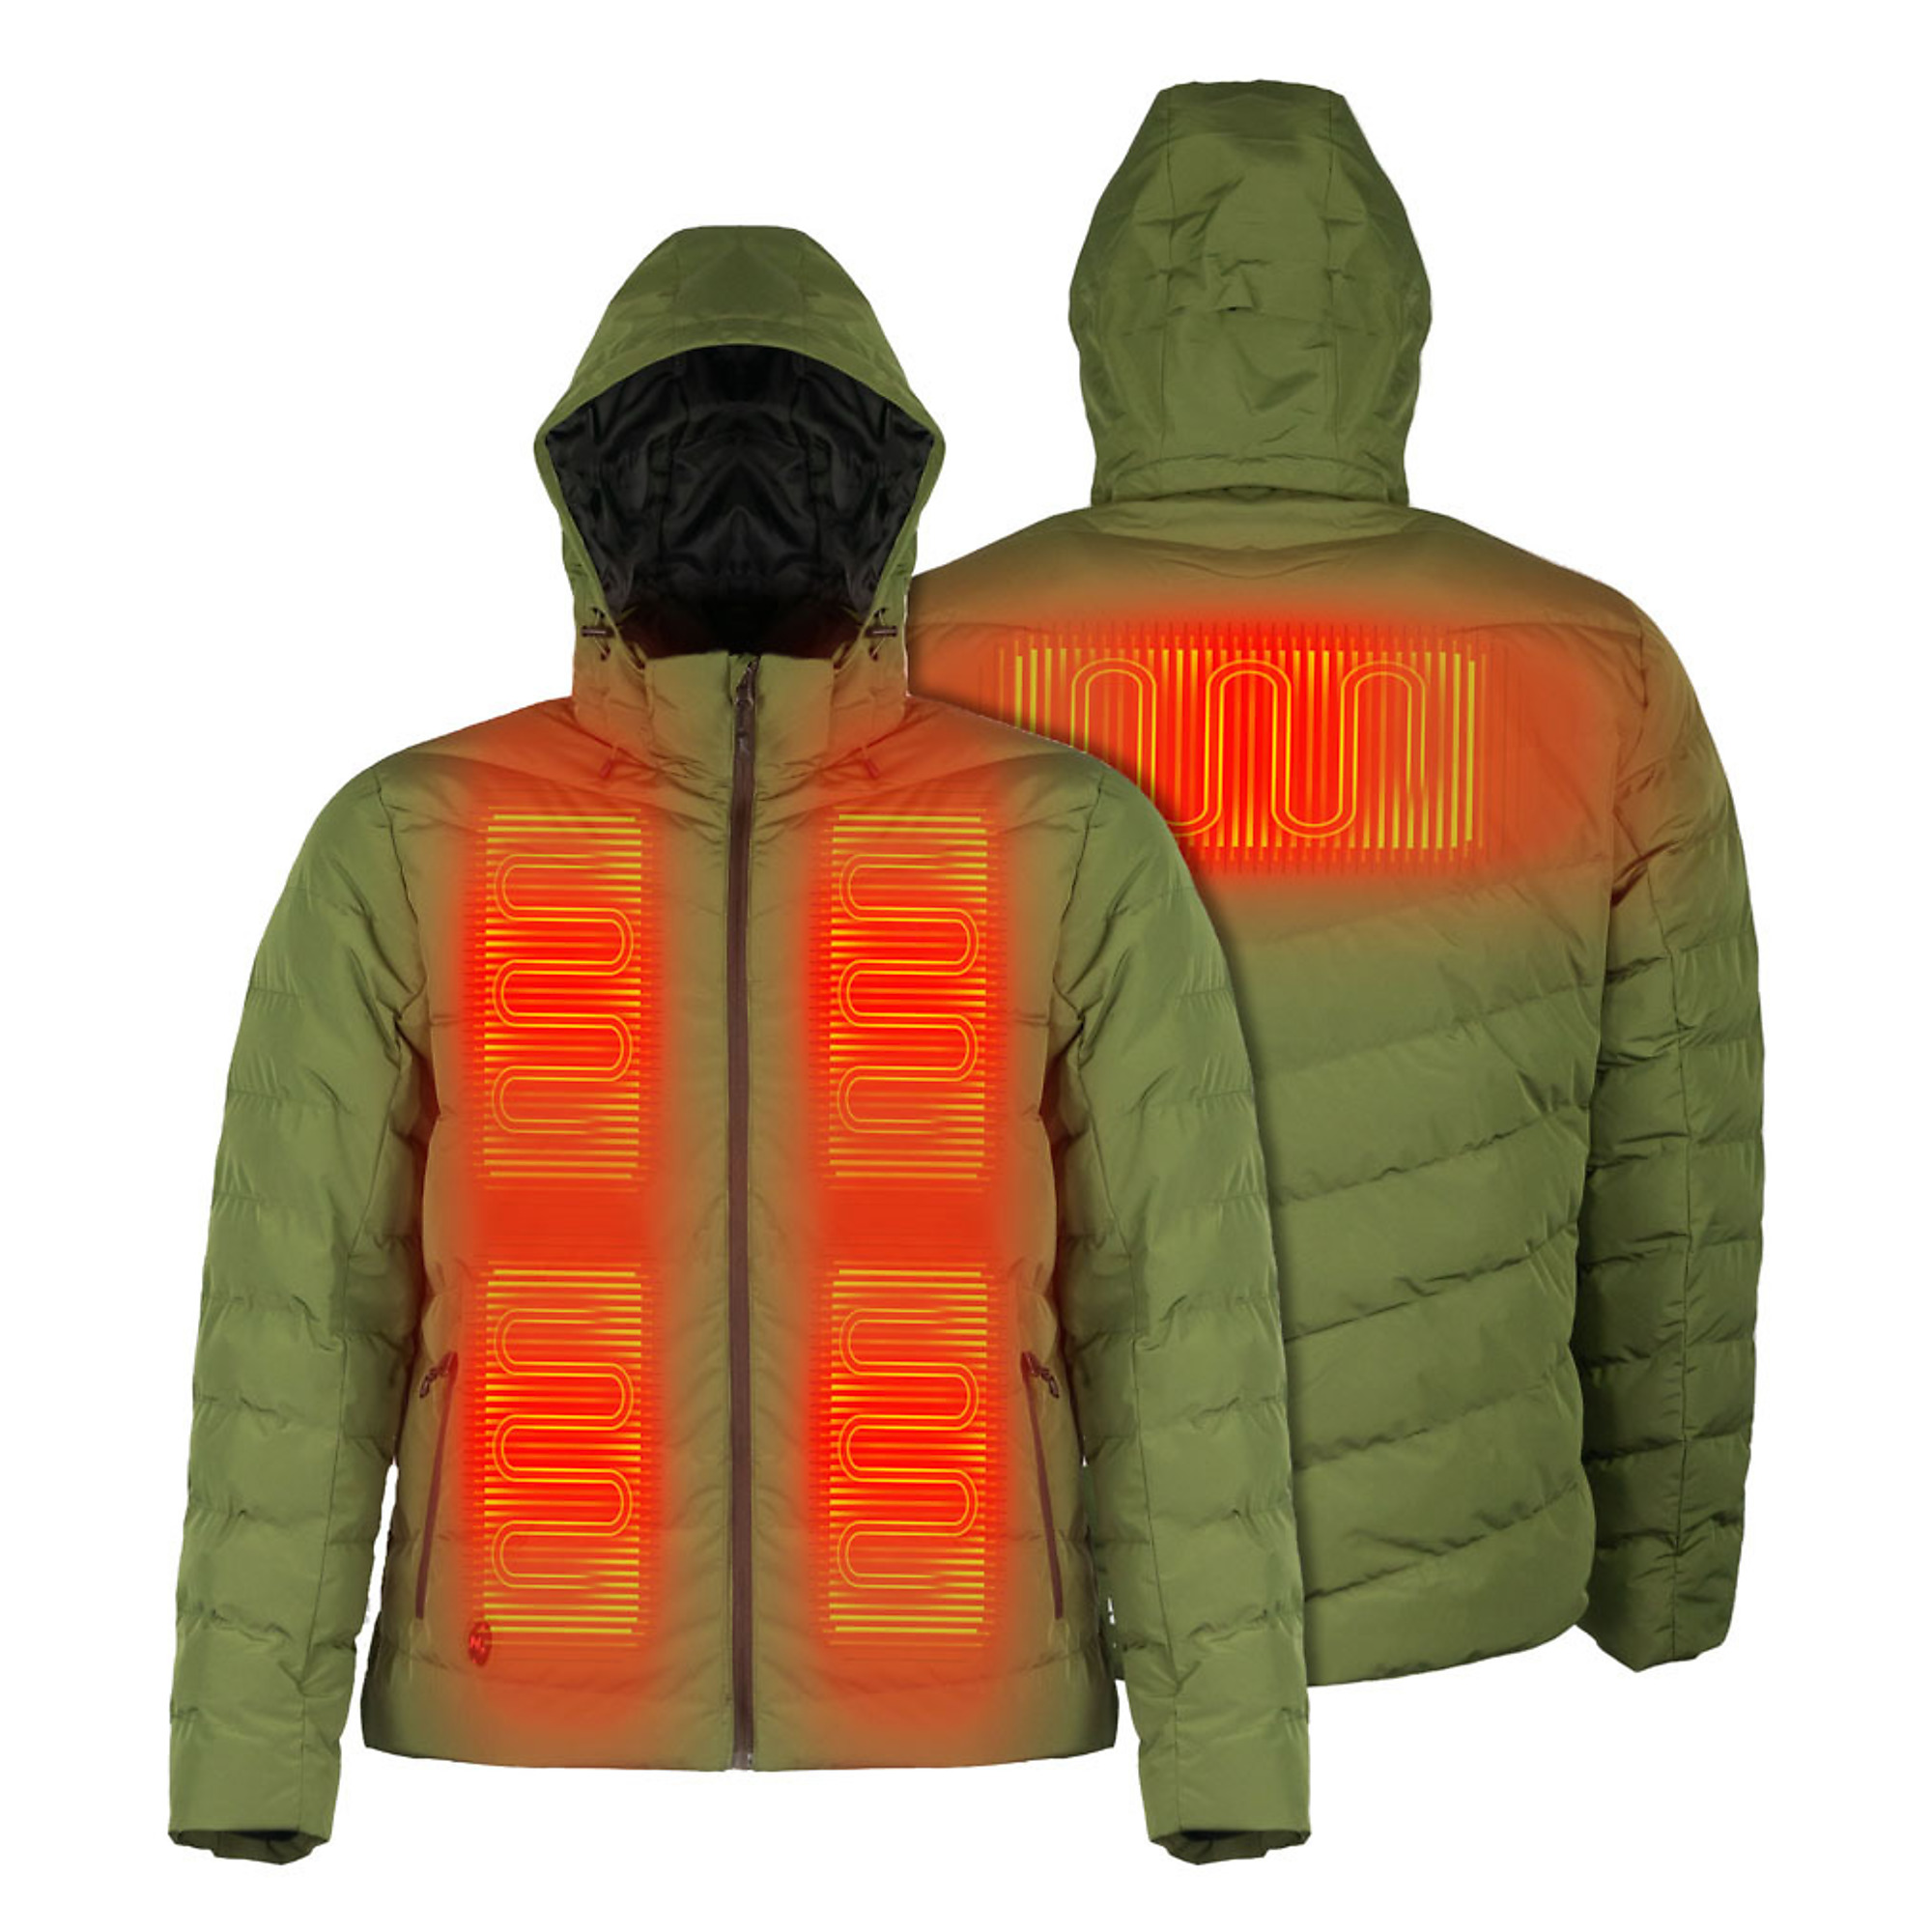 Fieldsheer, Men's Crest Heated Jacket with 7.4v Battery, Size L, Color Olive Green, Model MWMJ37110422